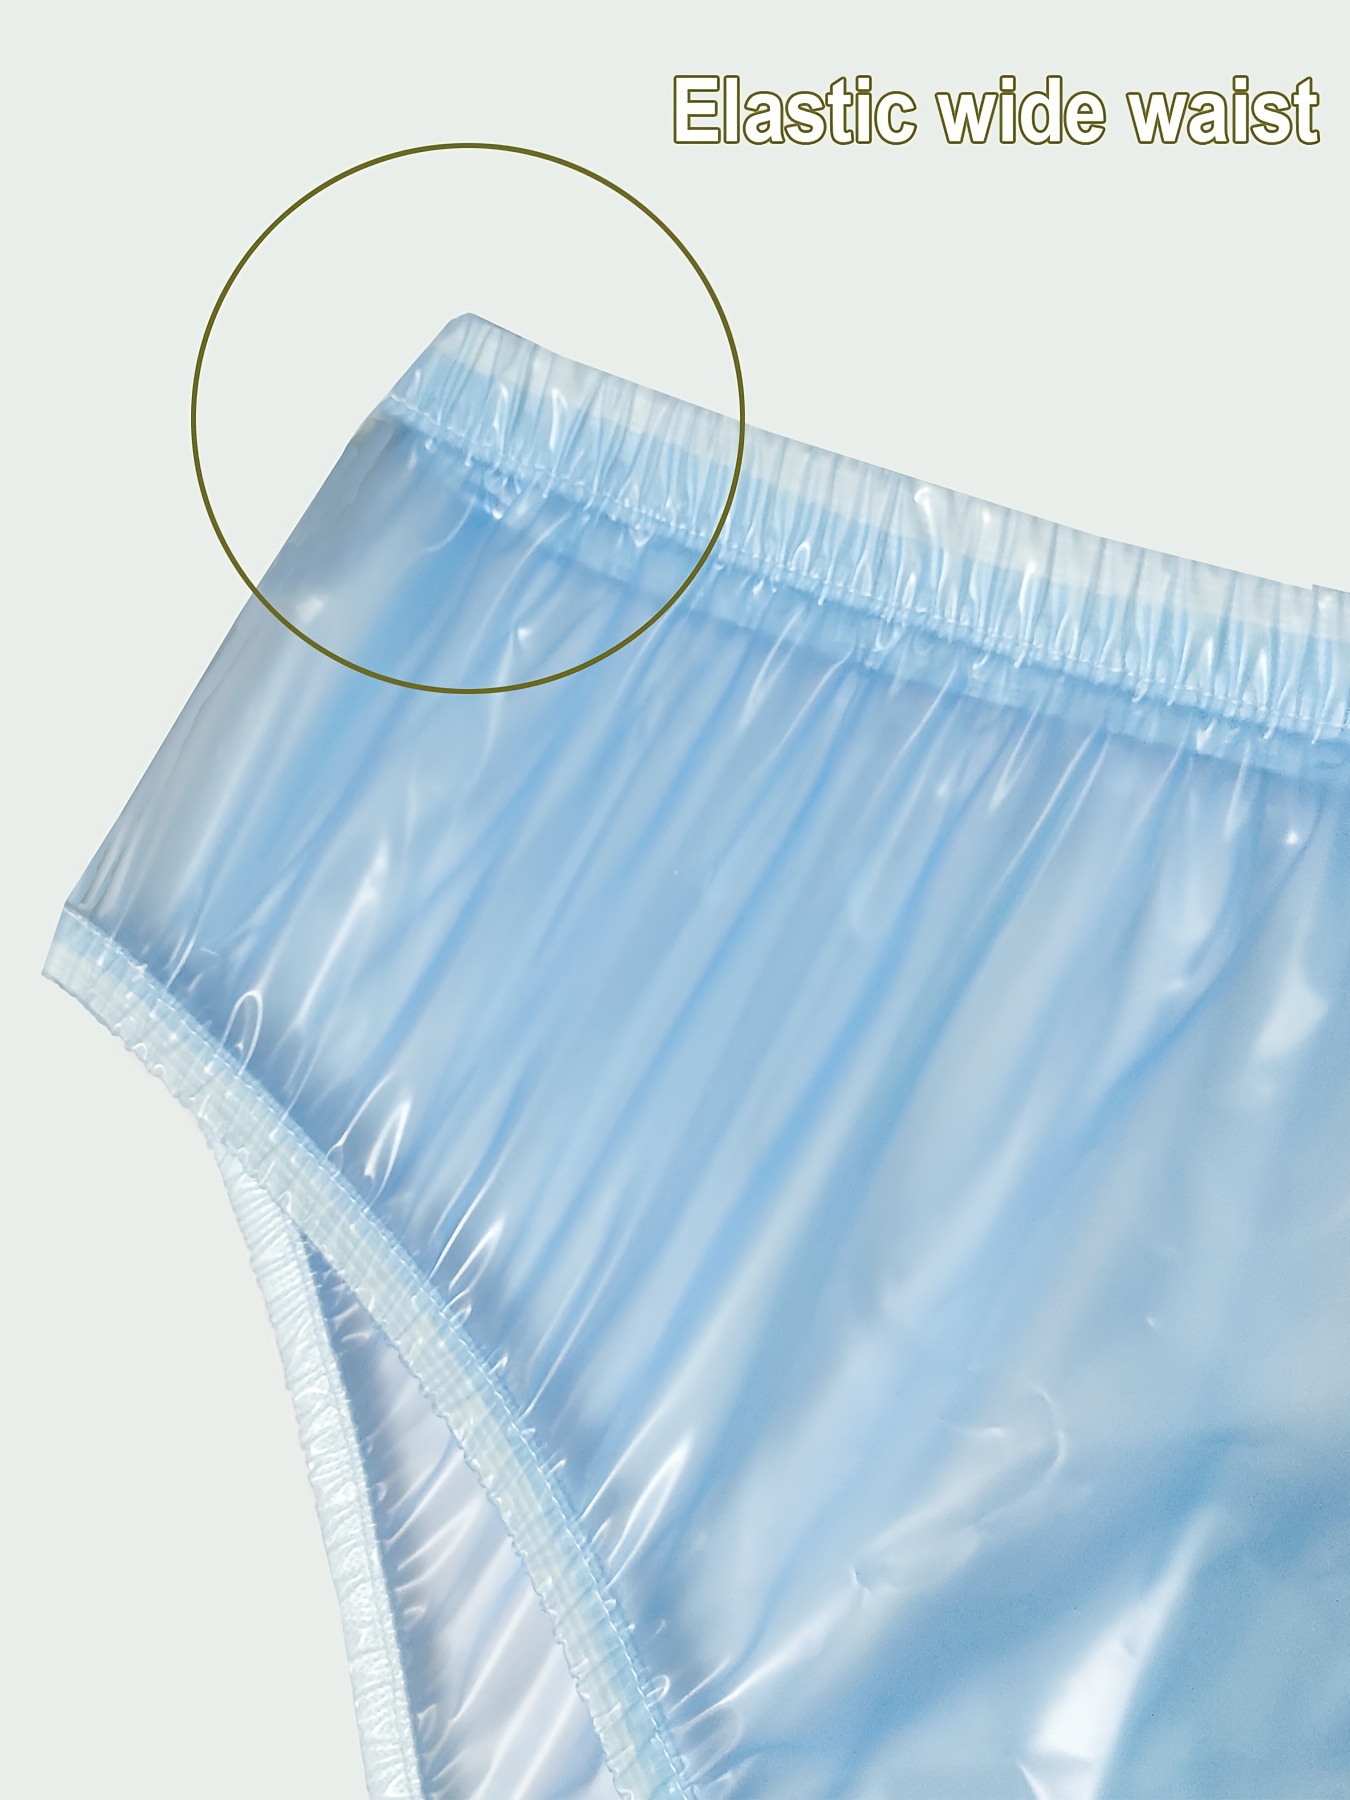 Clear PVC Panties Adult Shorts Oversized Man Male Lingerie Transpartent PVC  Underwear Lingerie,Green,L